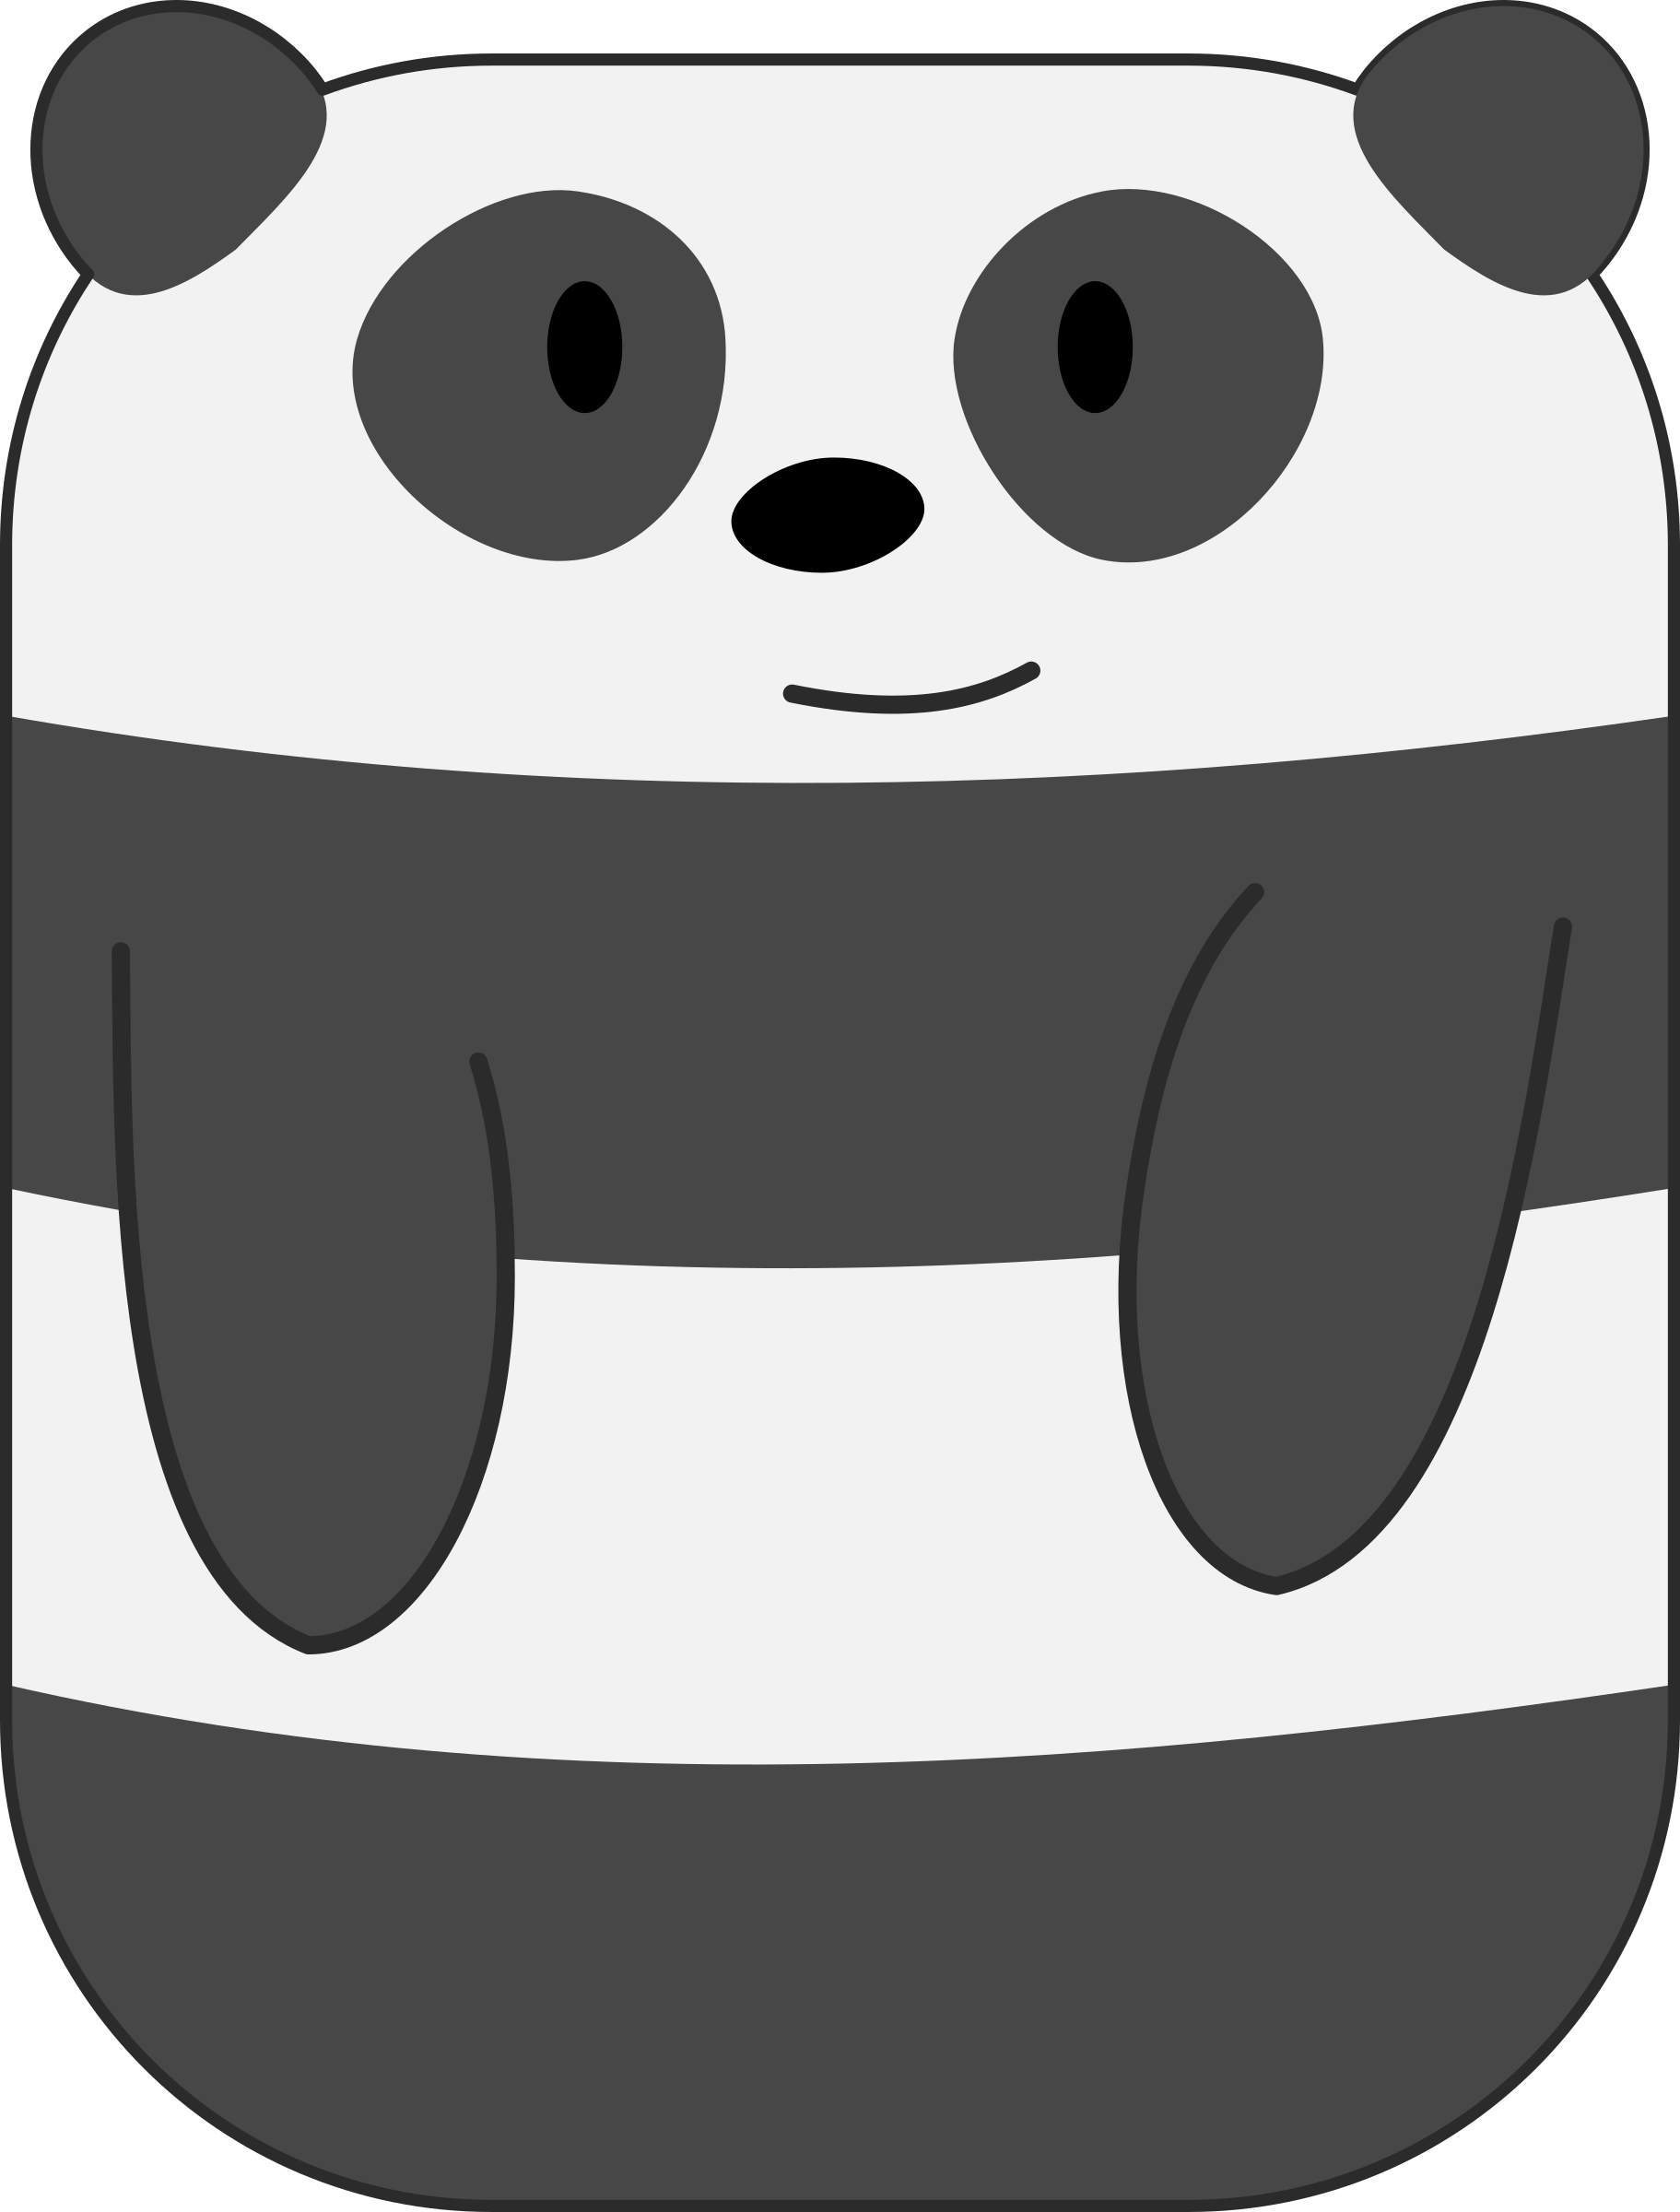 Clipart - Cute Cartoon Panda with Hands